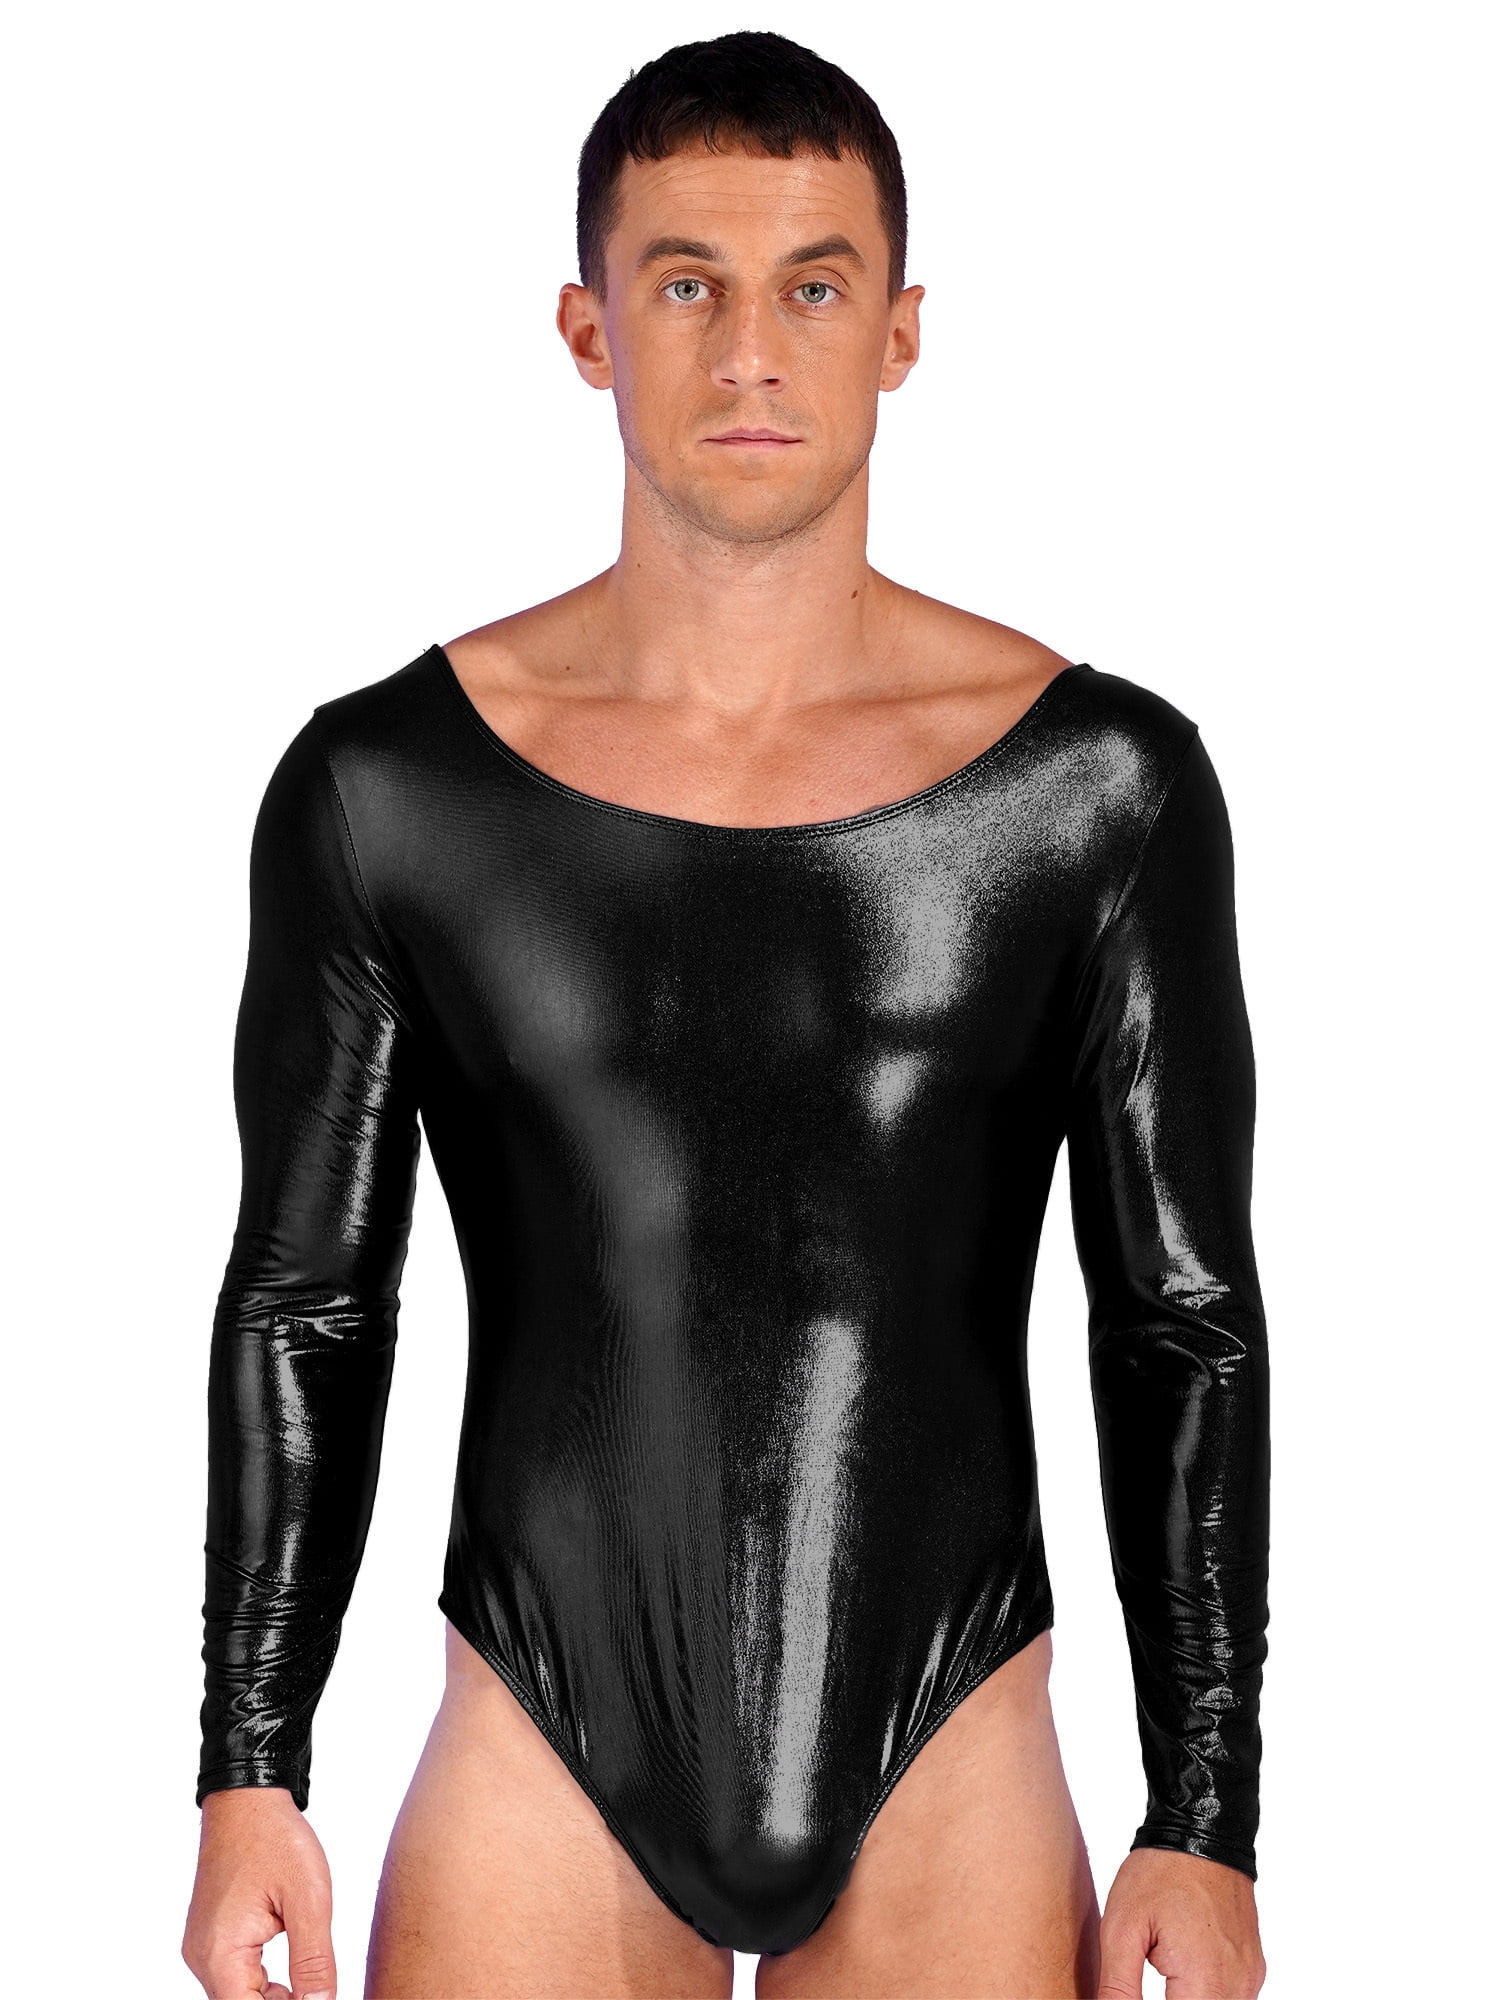 YEAHDOR Mens Shiny Long Sleeve Ballet Dance Bodysuit Patent Leather  Gymnastics Leotard Bodycon Unitard Costume Black XXL 